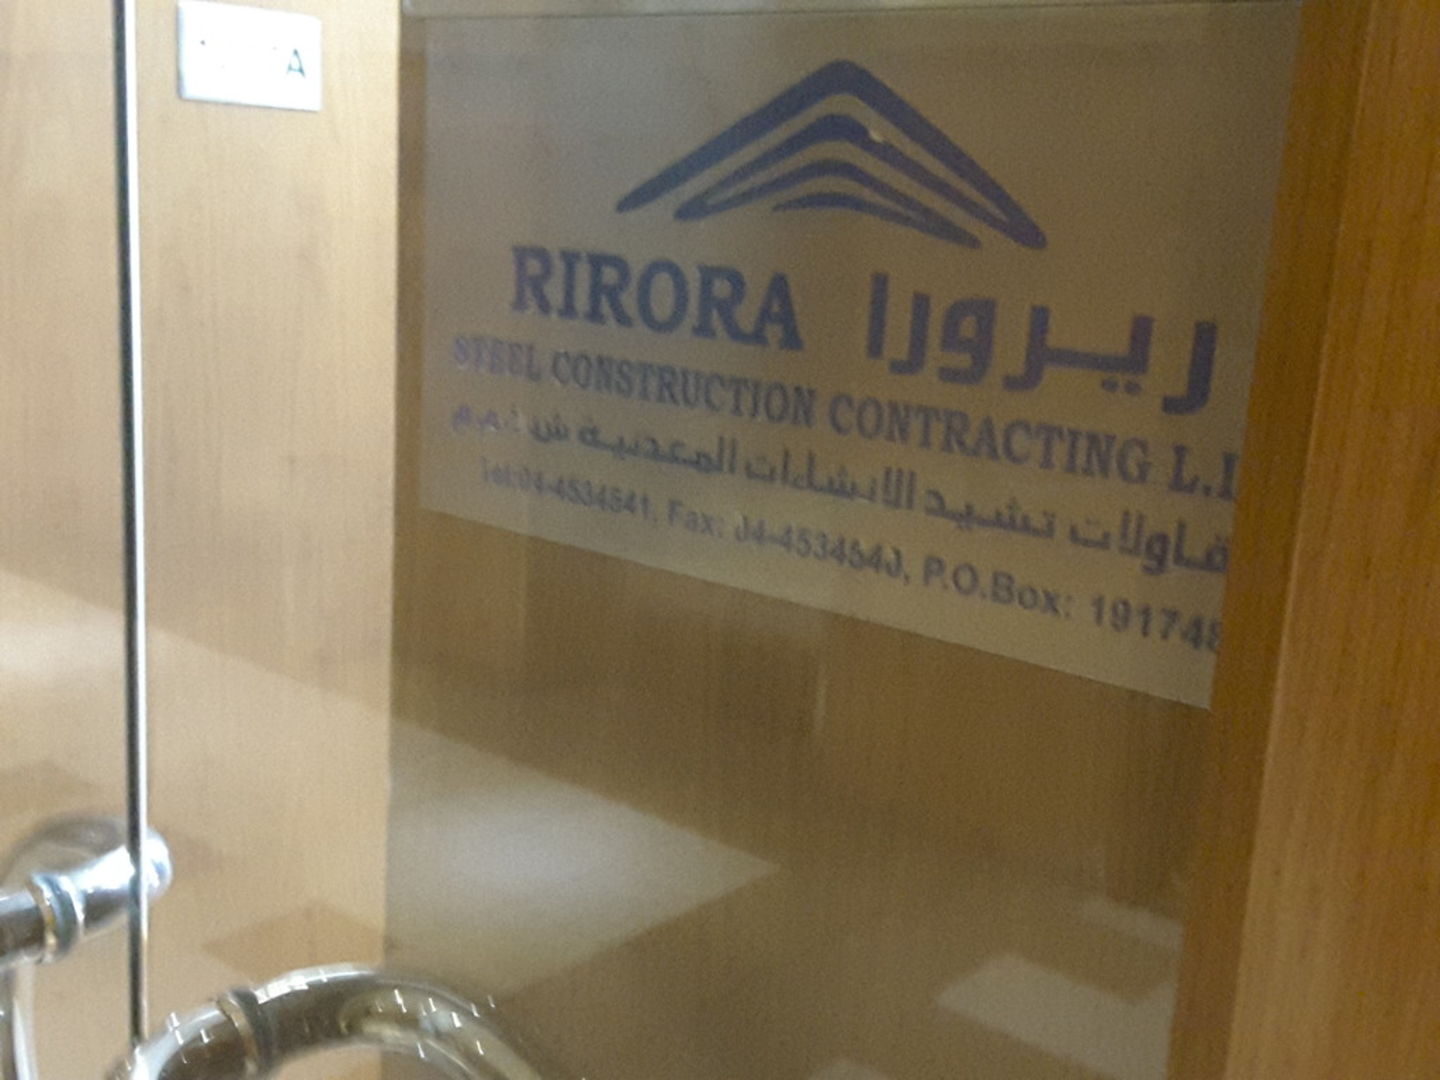 Rirora Steel Construction Contracting